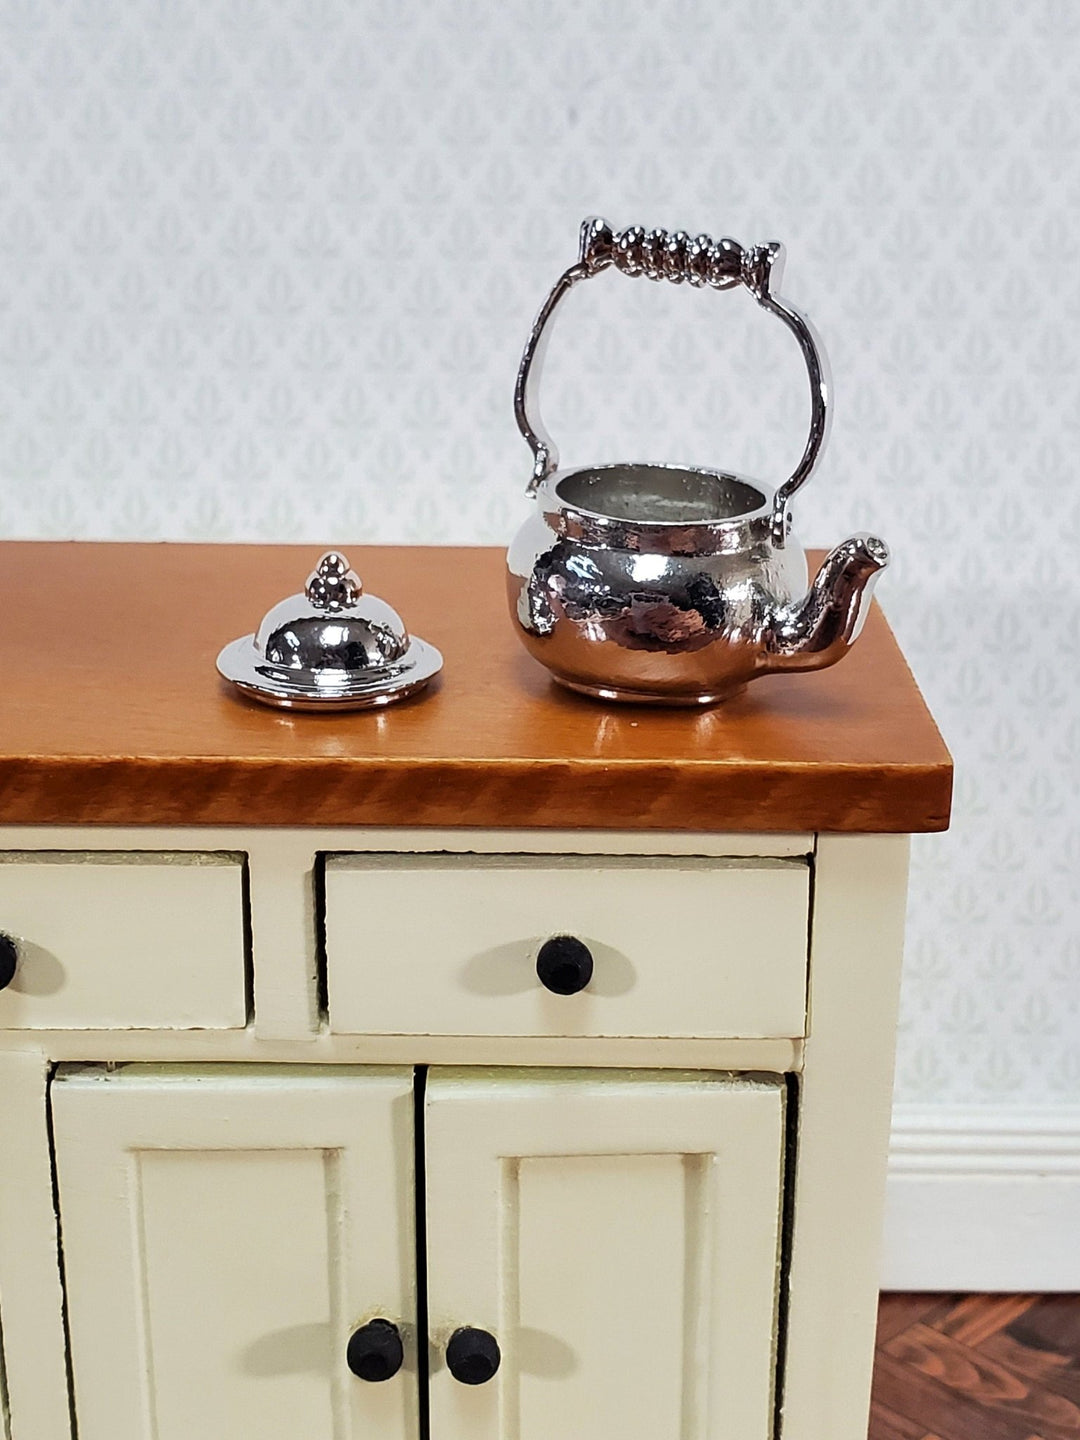 1/12 Scale Miniature Soup Pot With Pot Cover Dollhouse Accessories